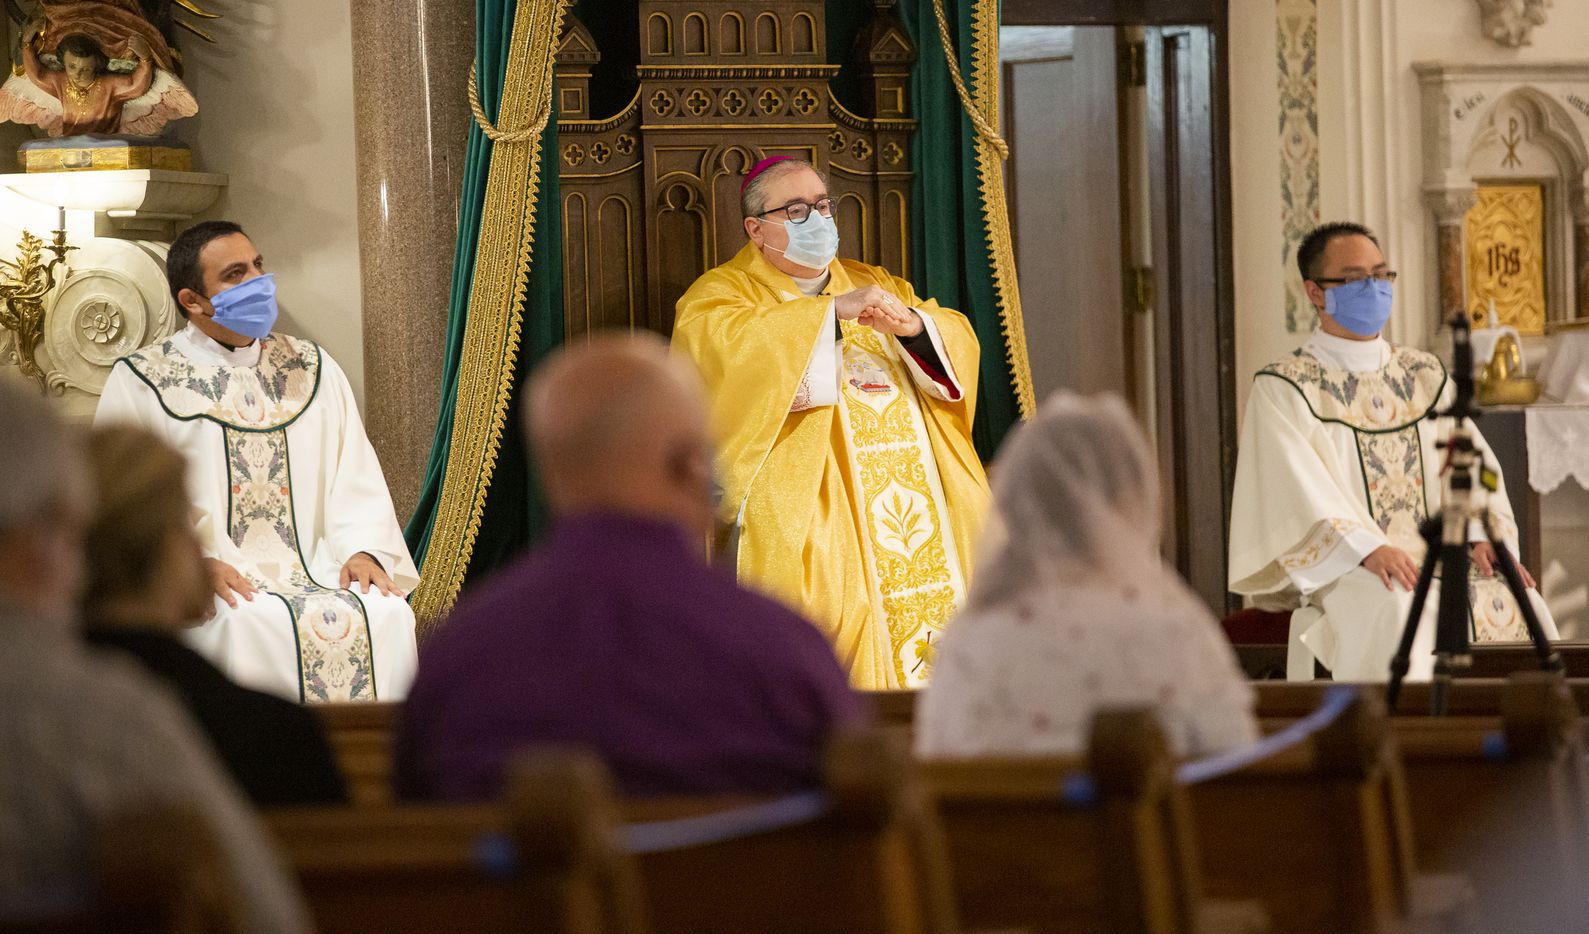 Bishop Michael Olson (center) rubs sanitizer on his hands during mass.